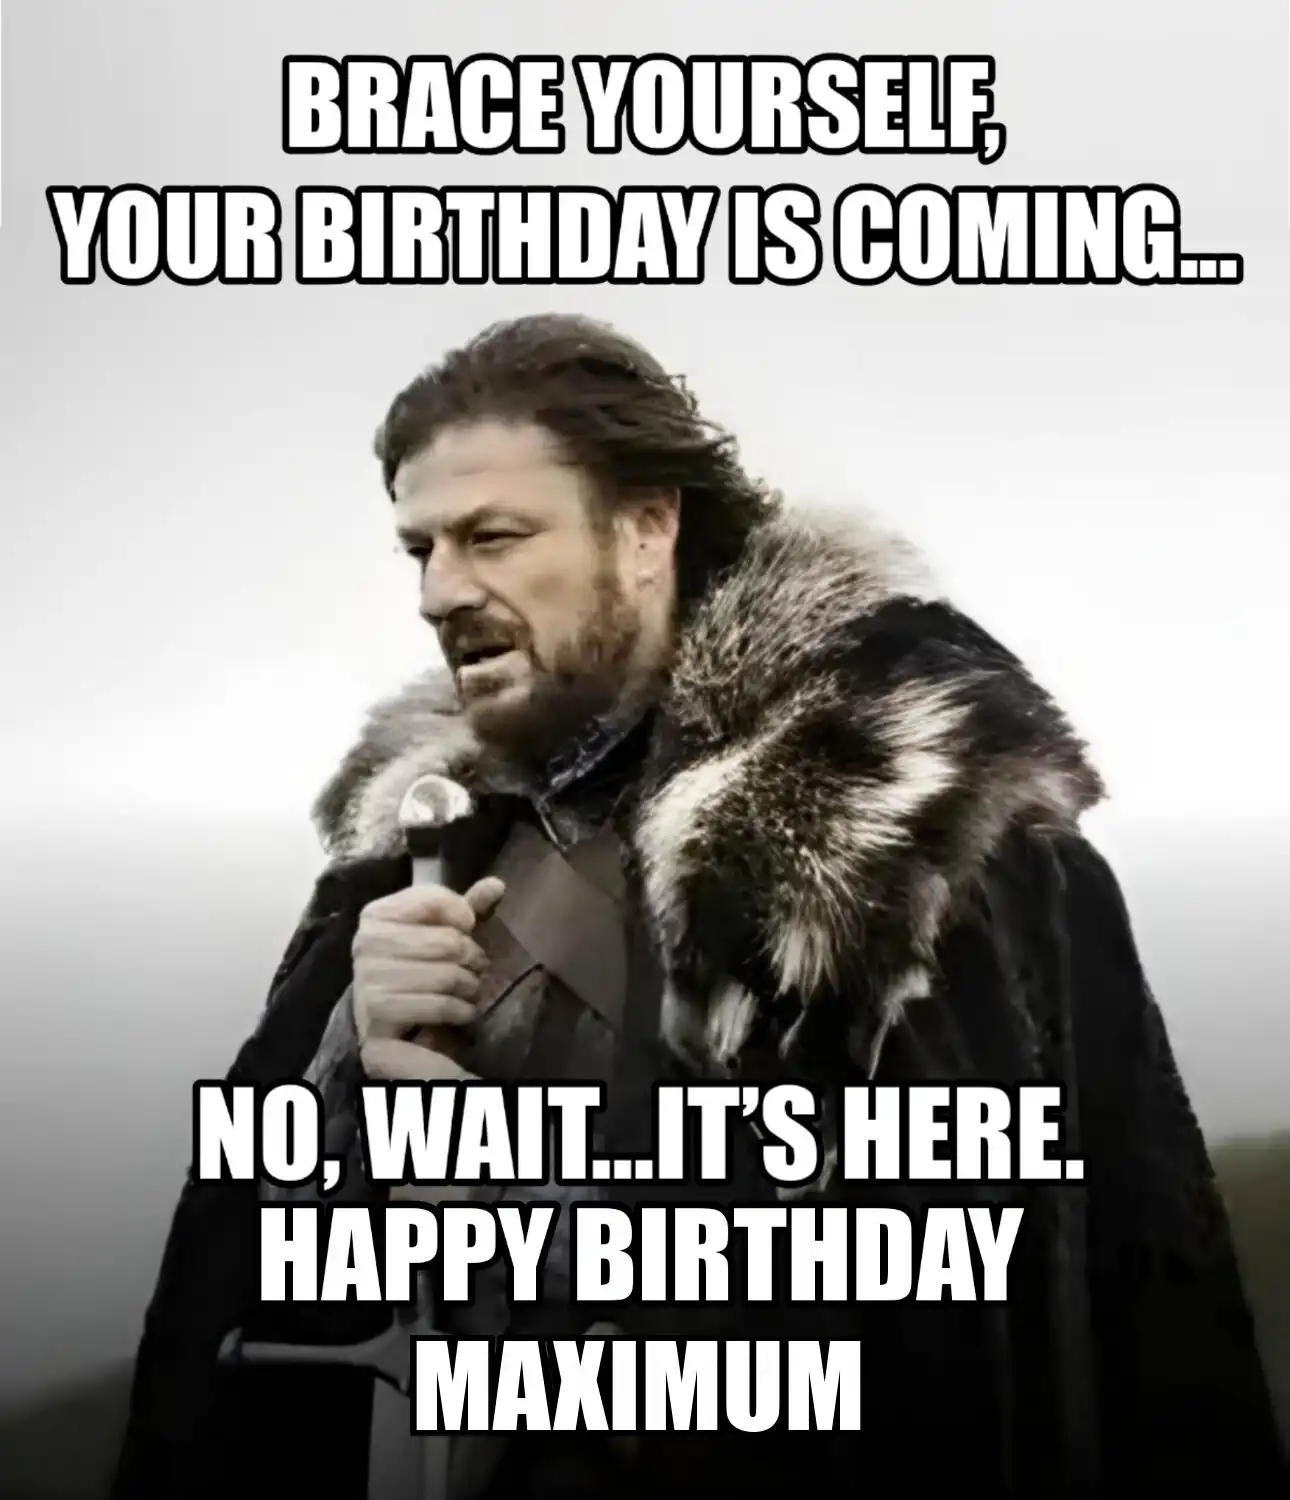 Happy Birthday Maximum Brace Yourself Your Birthday Is Coming Meme